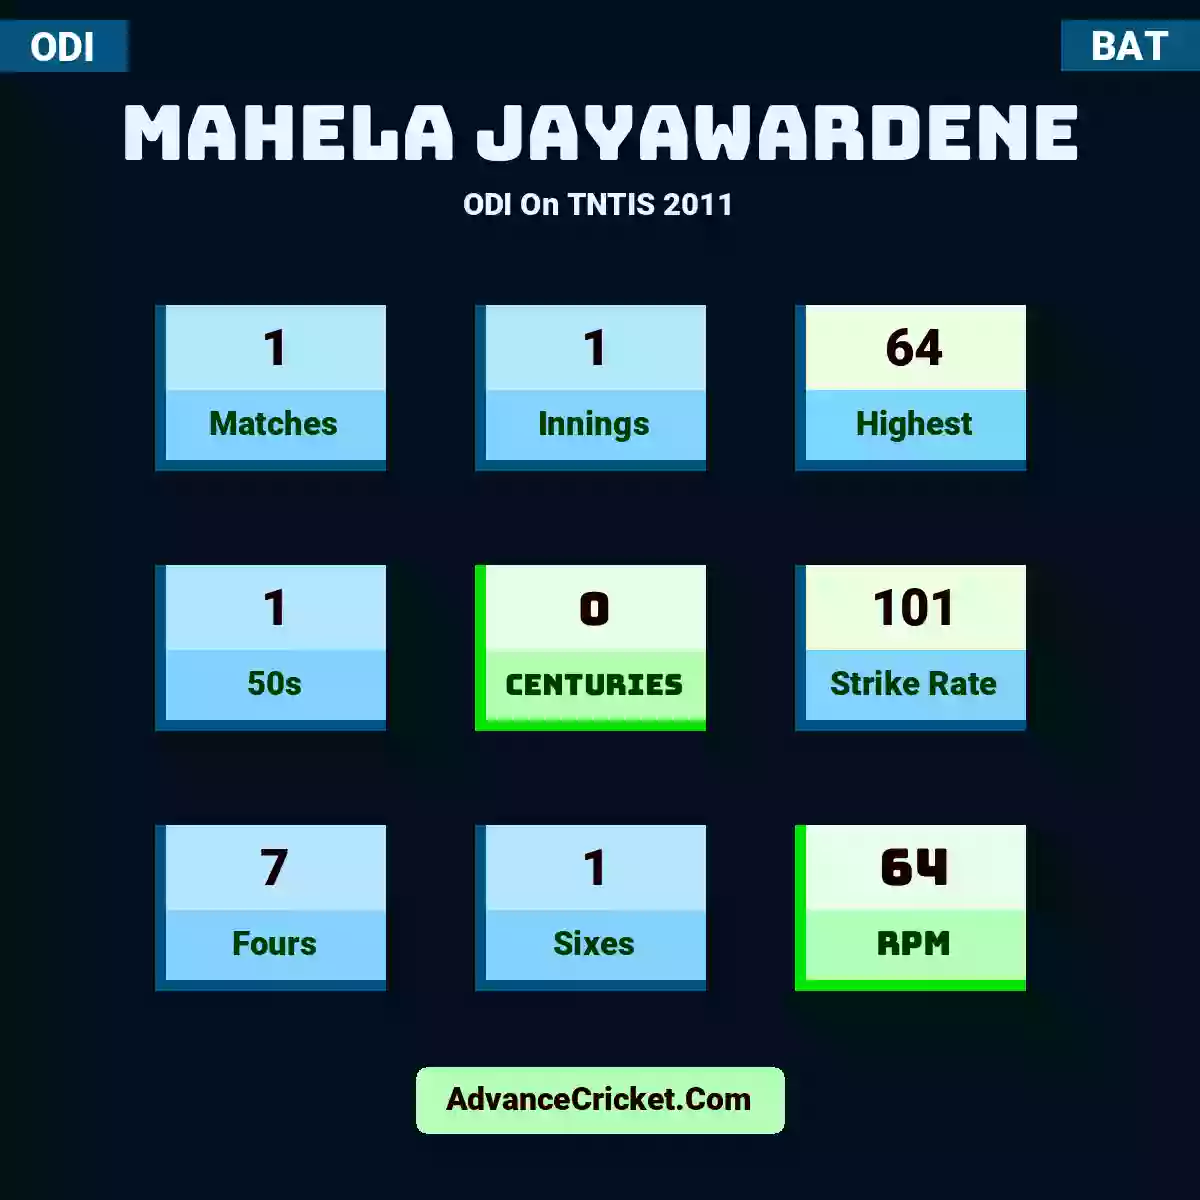 Mahela Jayawardene ODI  On TNTIS 2011, Mahela Jayawardene played 1 matches, scored 64 runs as highest, 1 half-centuries, and 0 centuries, with a strike rate of 101. M.Jayawardene hit 7 fours and 1 sixes, with an RPM of 64.